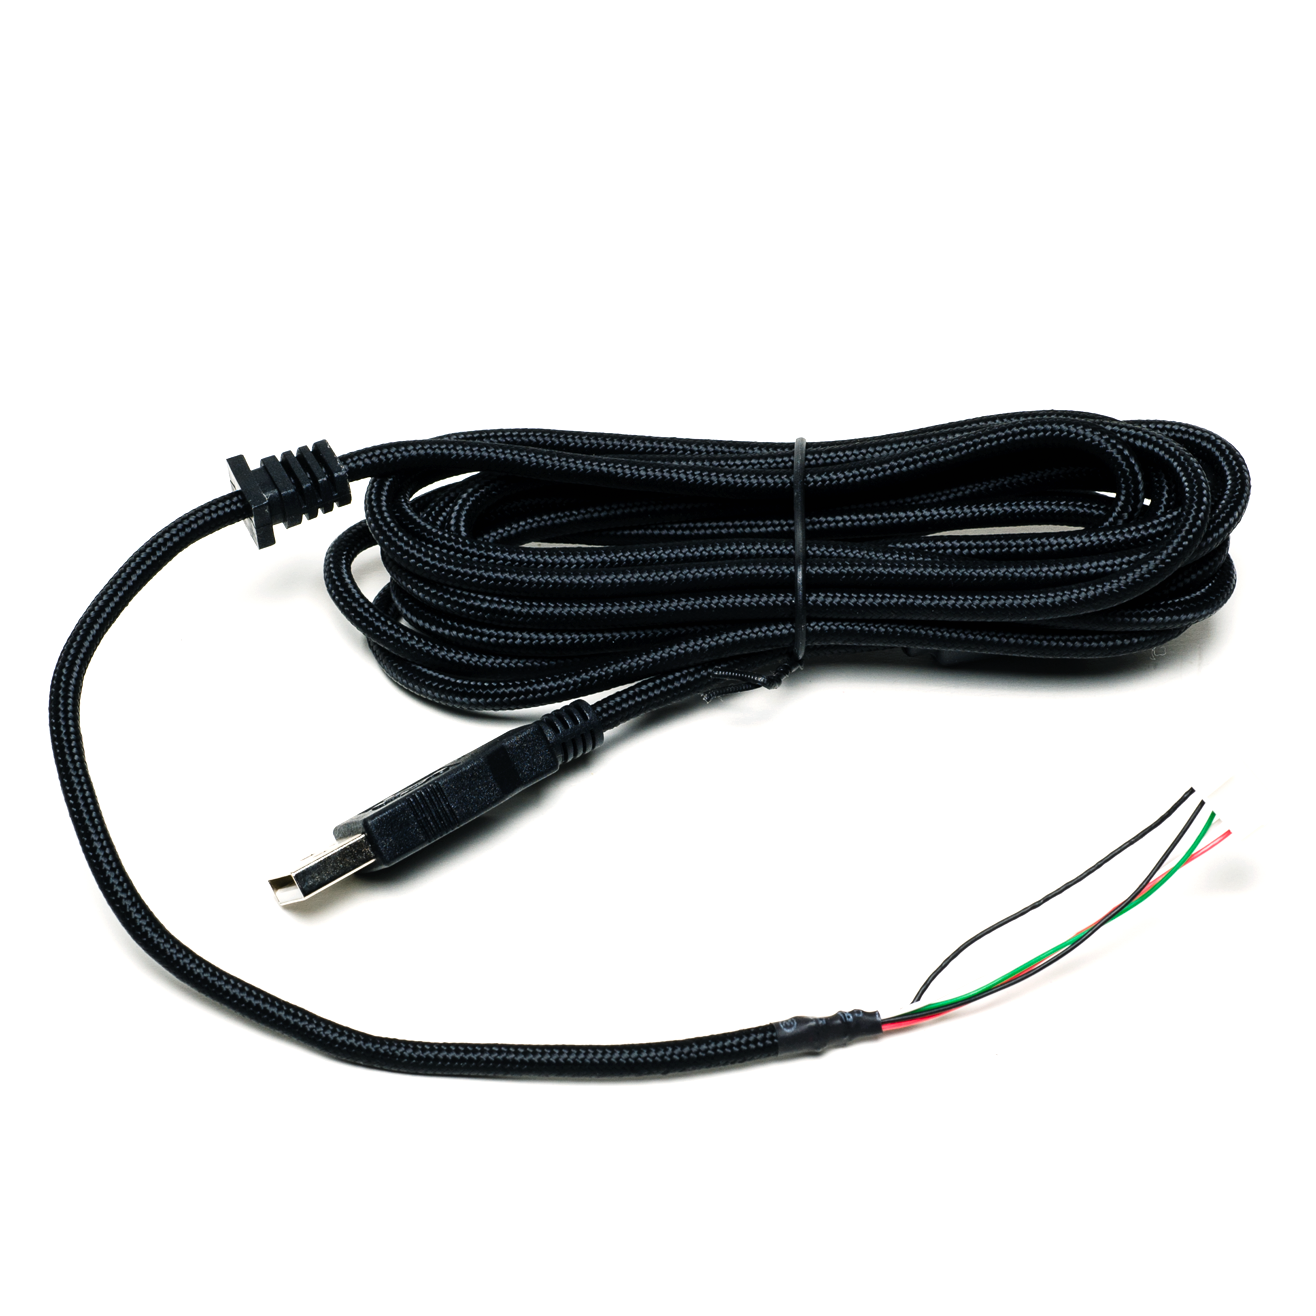 QANBA BRAIDED USB Cable (Works for all QANBA arcade sticks